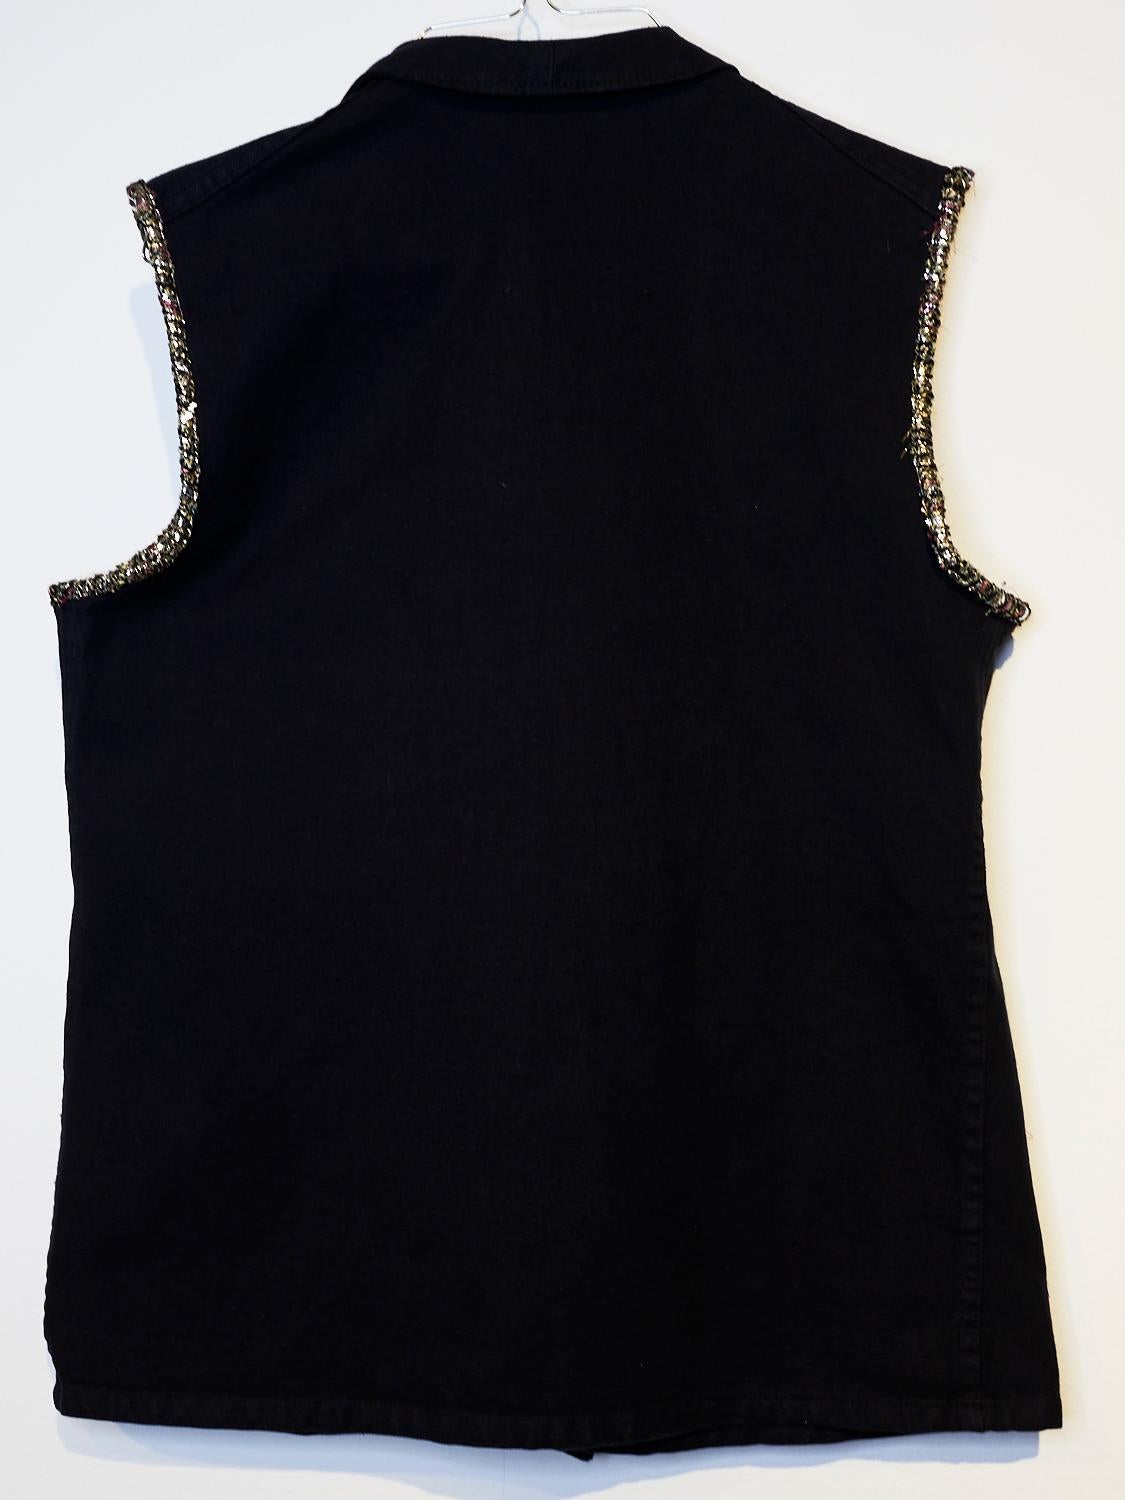 Embellished Sleeveless Jacket Vest Evening Black Gold Tweed Pockets J Dauphin 1